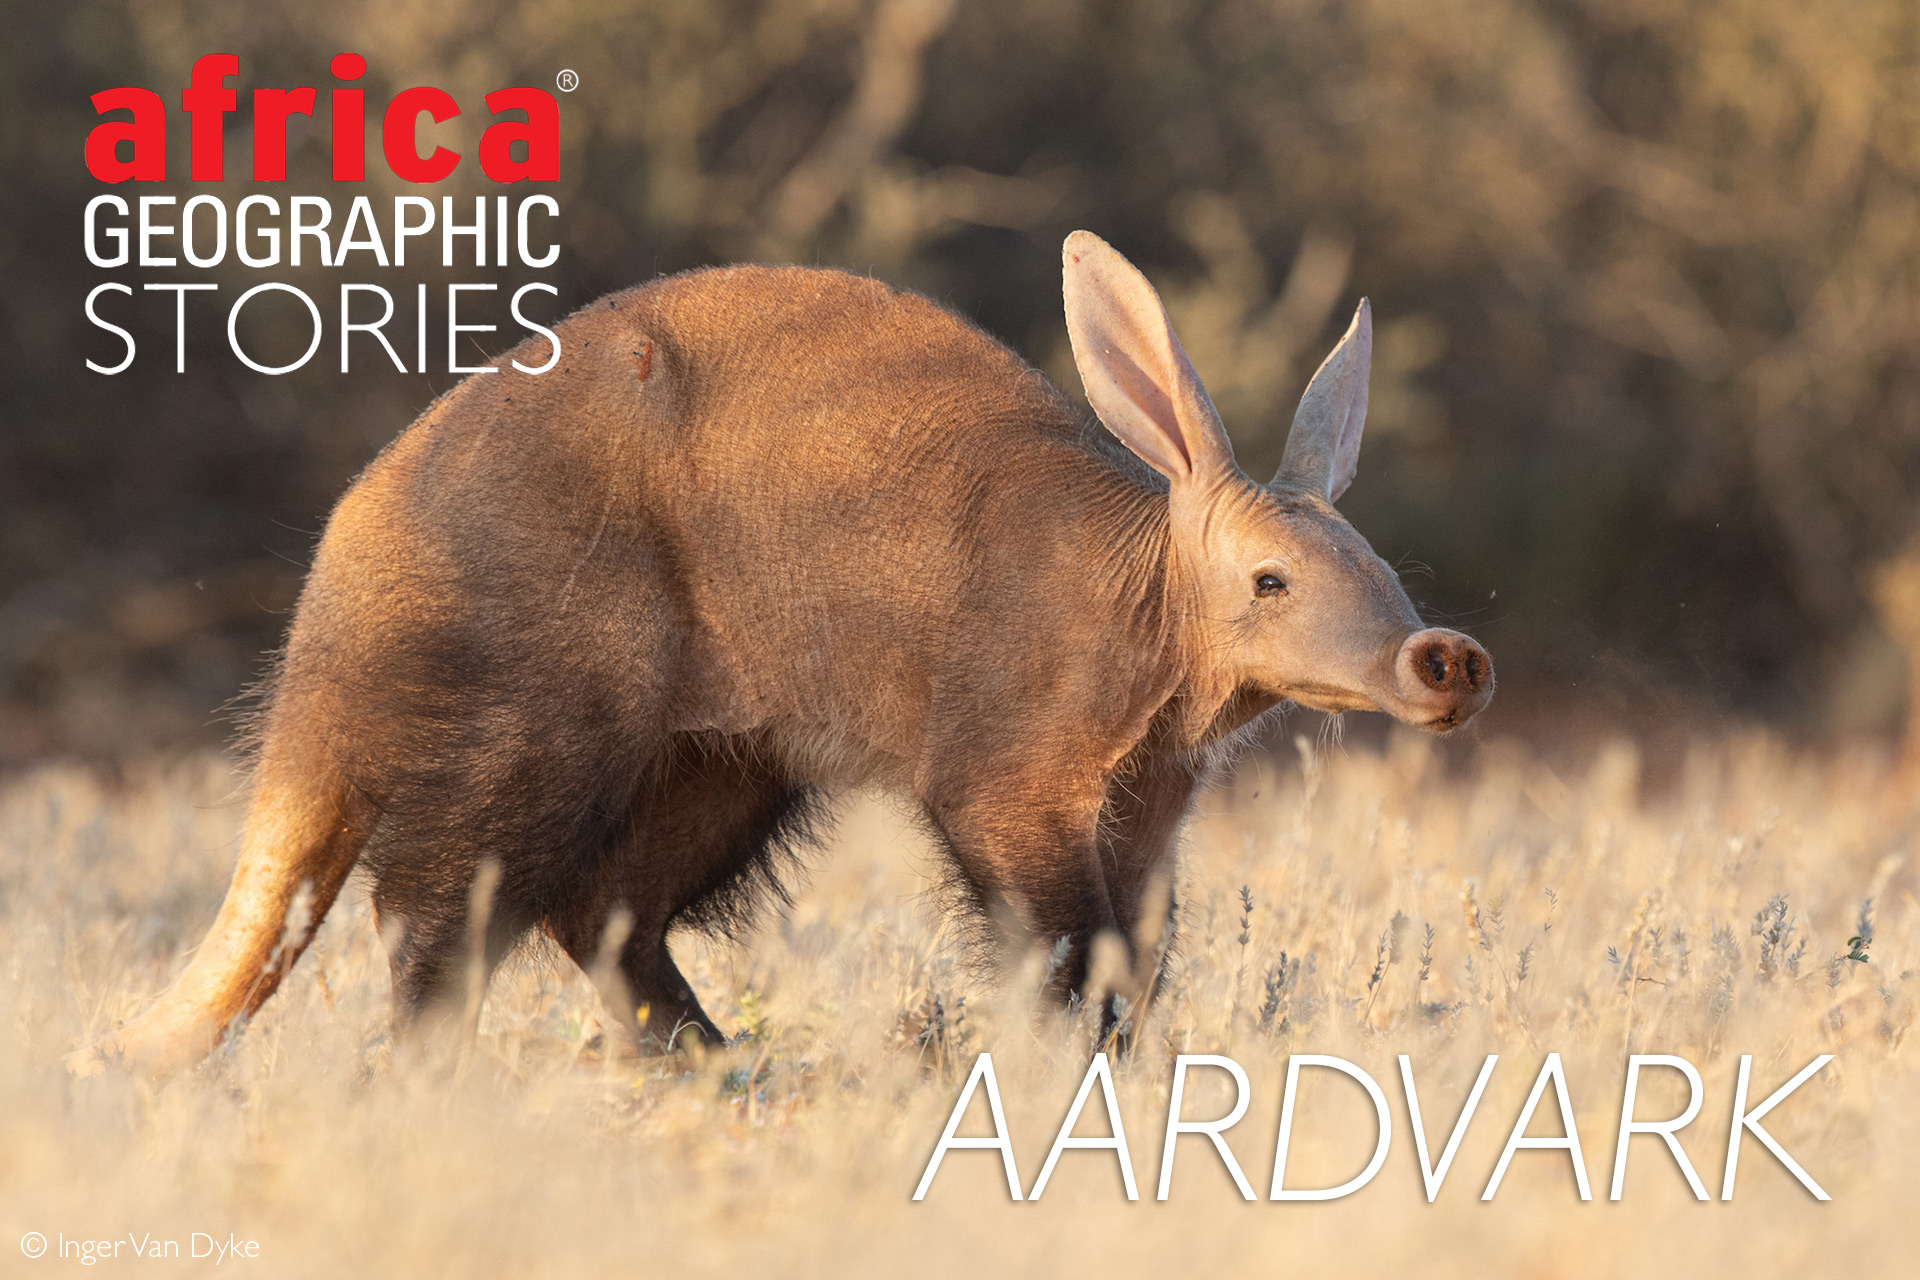 Aardvark - Africa Geographic